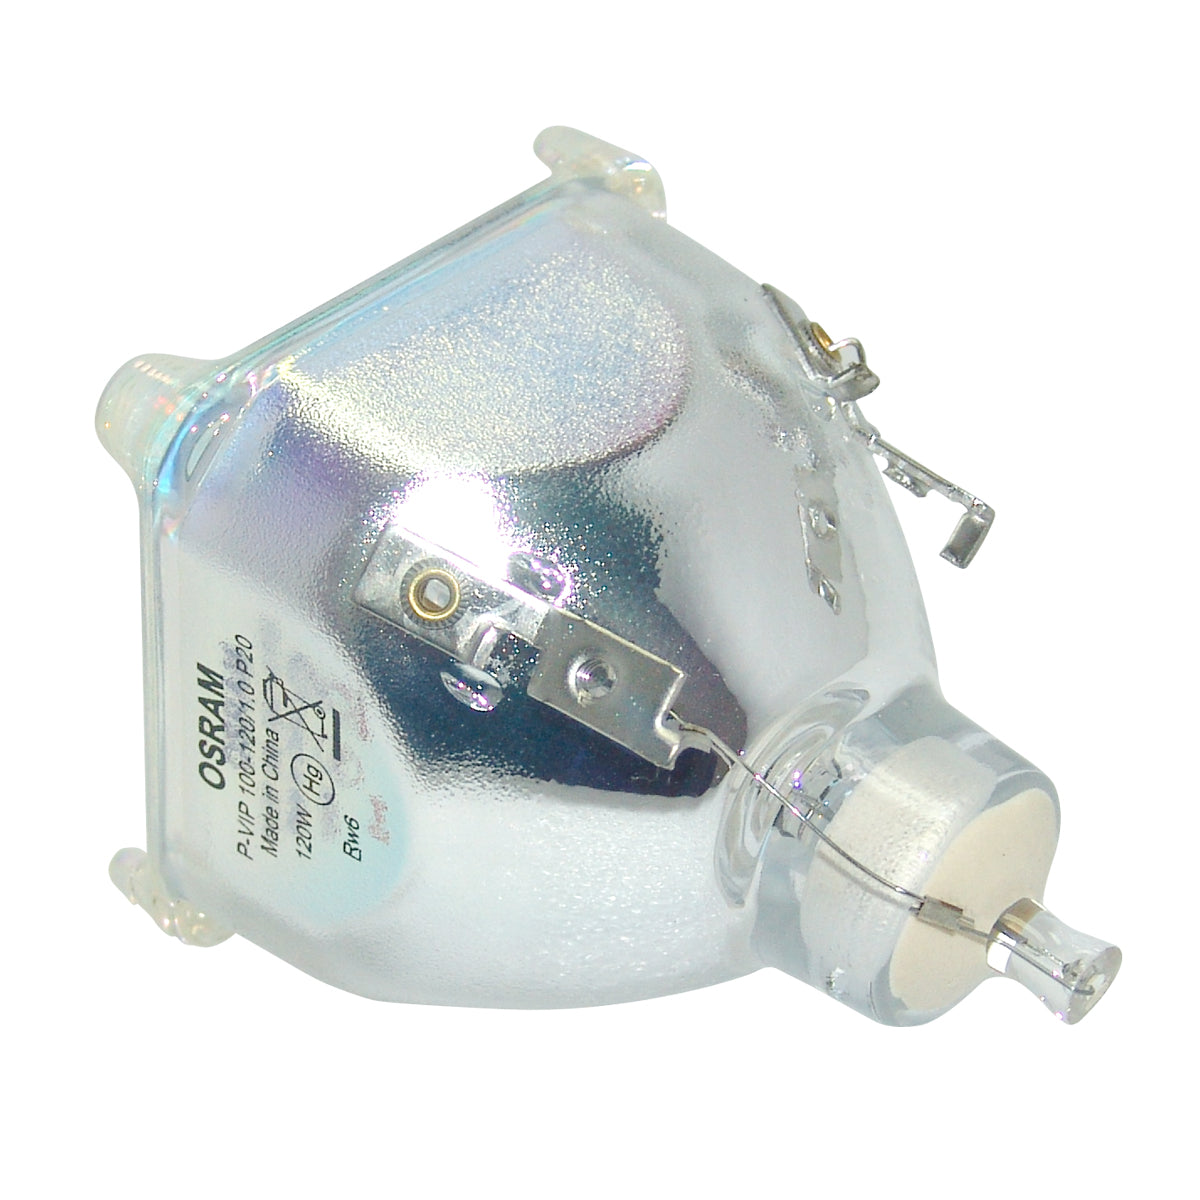 Dukane 456-233 Osram Projector Bare Lamp